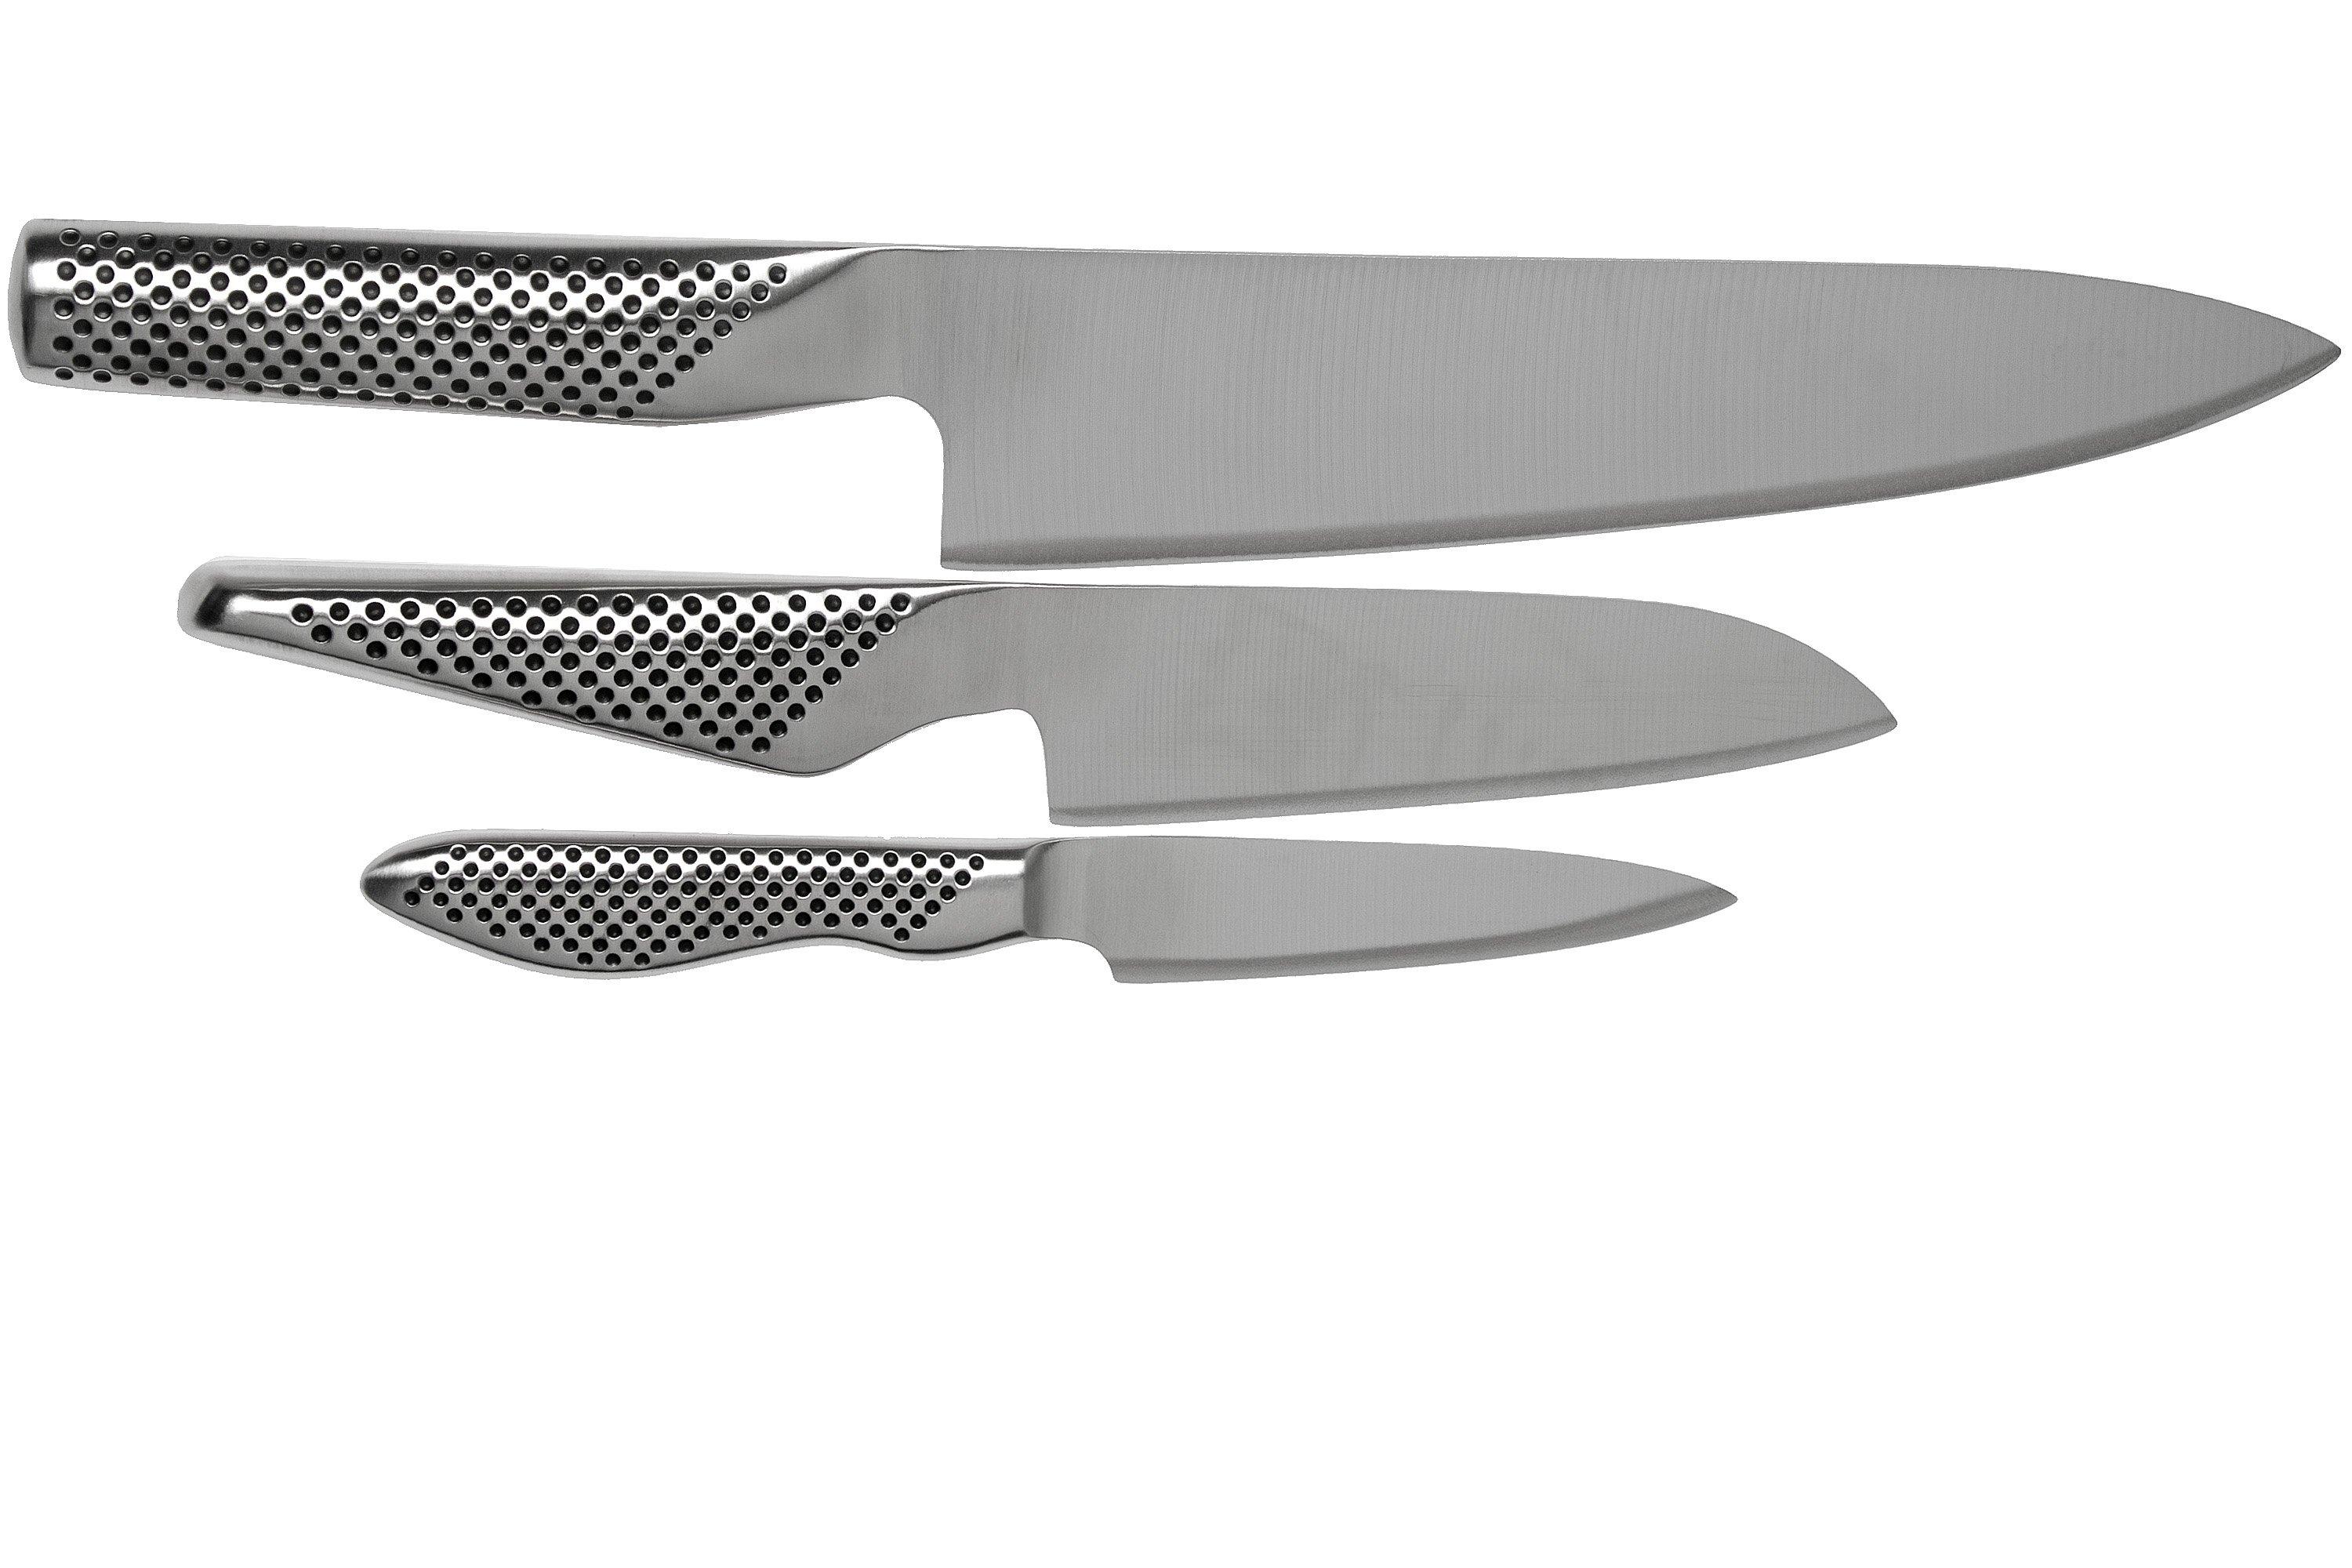 Zwilling 38430-007 Pro 3-piece knife set  Advantageously shopping at